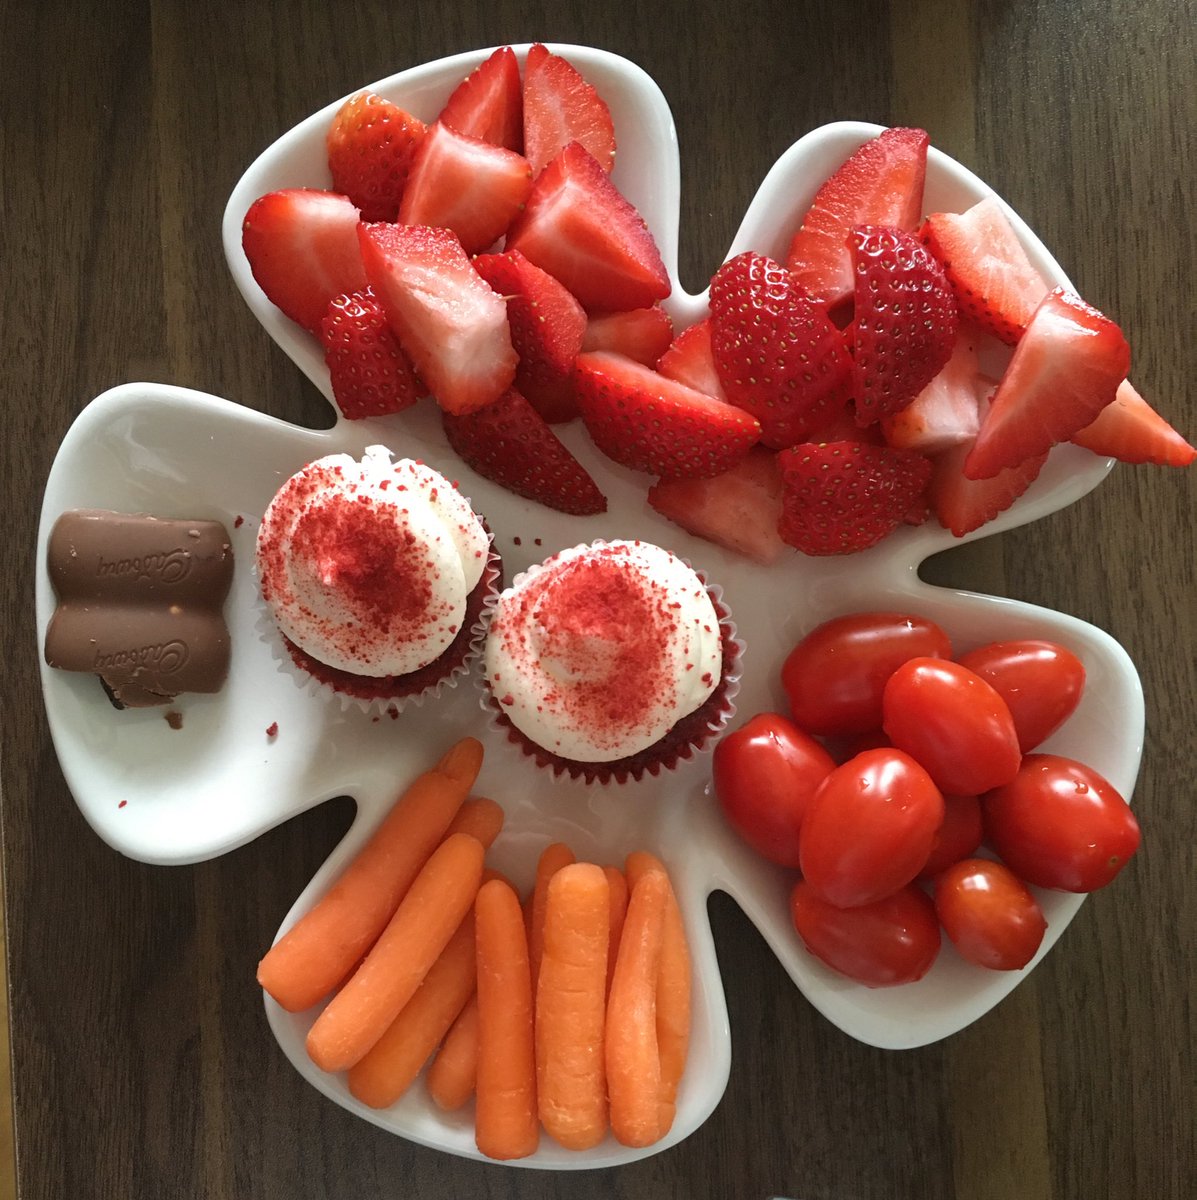 Sept. 21-strawberries, carrots, grape tomatos, 2 mini red velvet cupcakes, 2 pcs fruit & nut milk chocolate-white cheddar + sour cream & onion popcorn-ice cream cake w pecansTotal: 1150